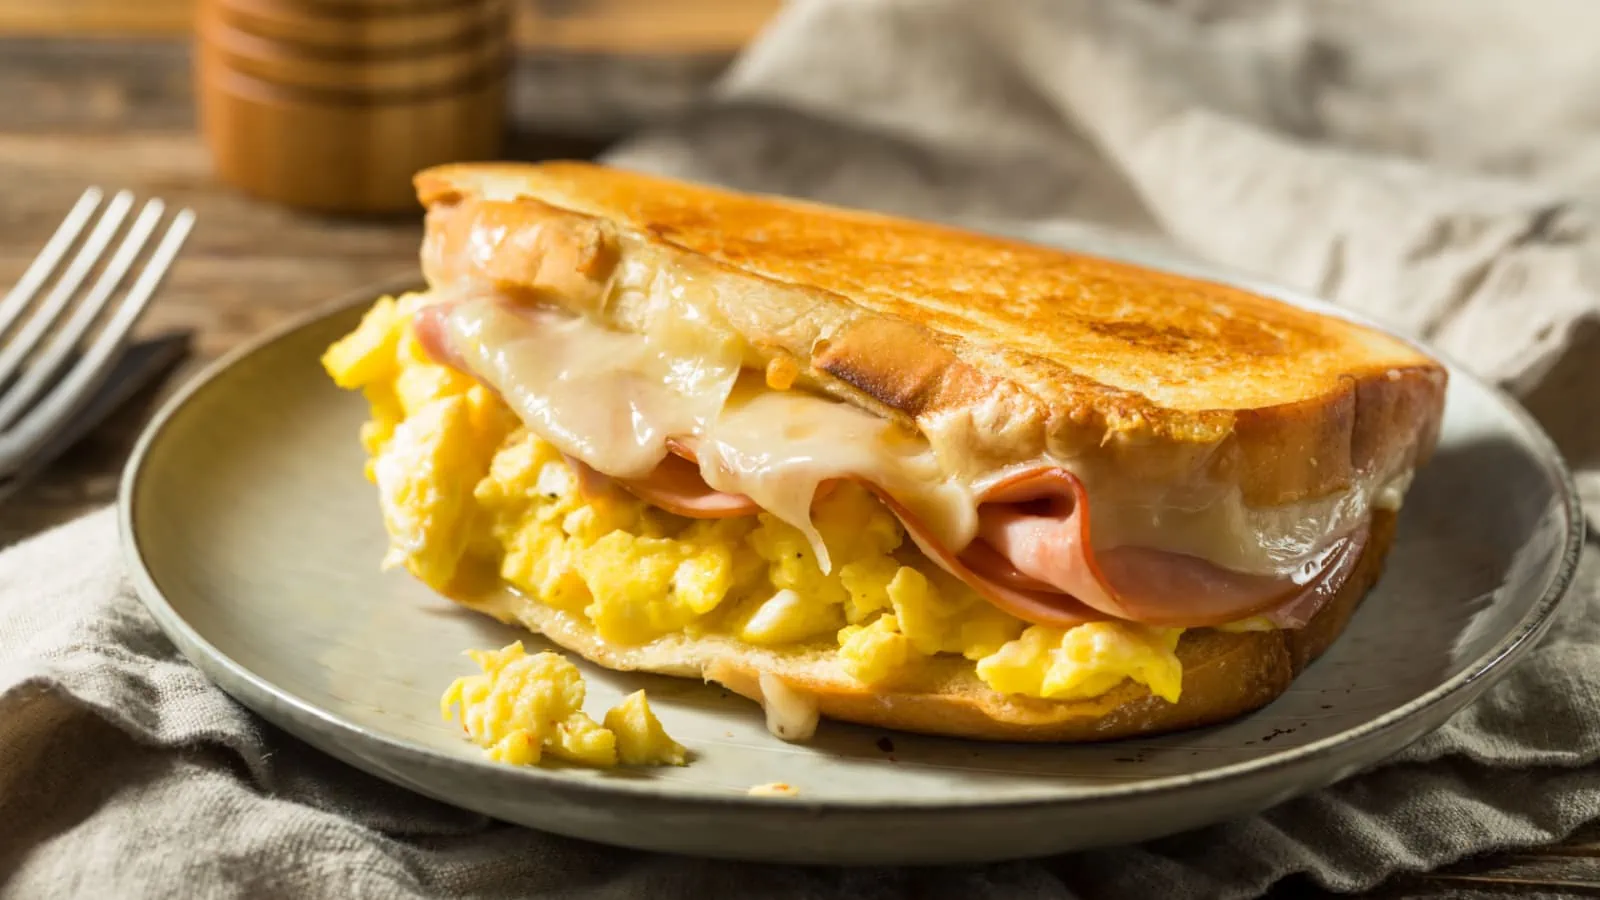 Egg sandwich with ham